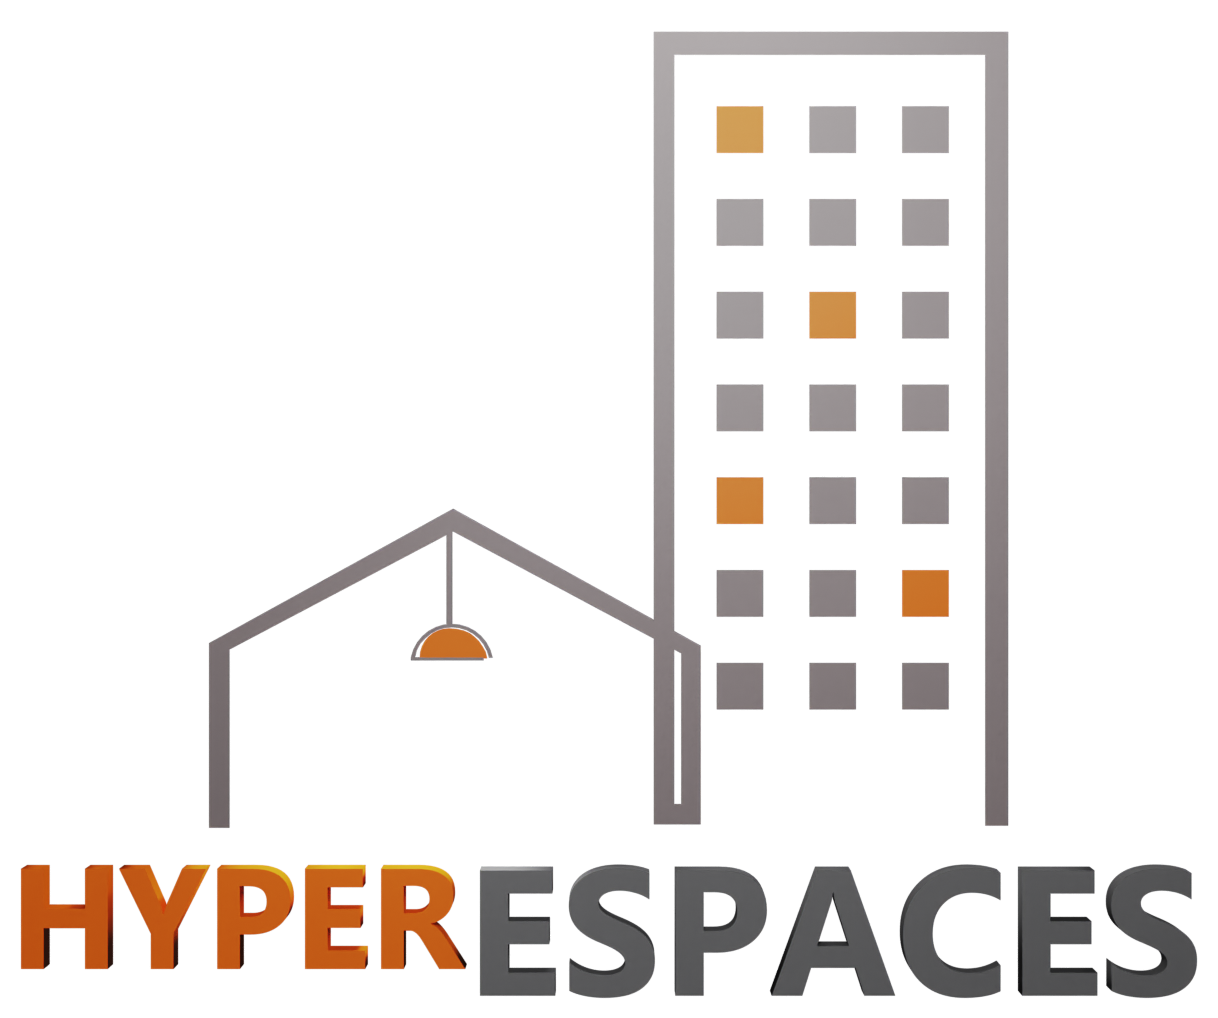 Hyperespaces